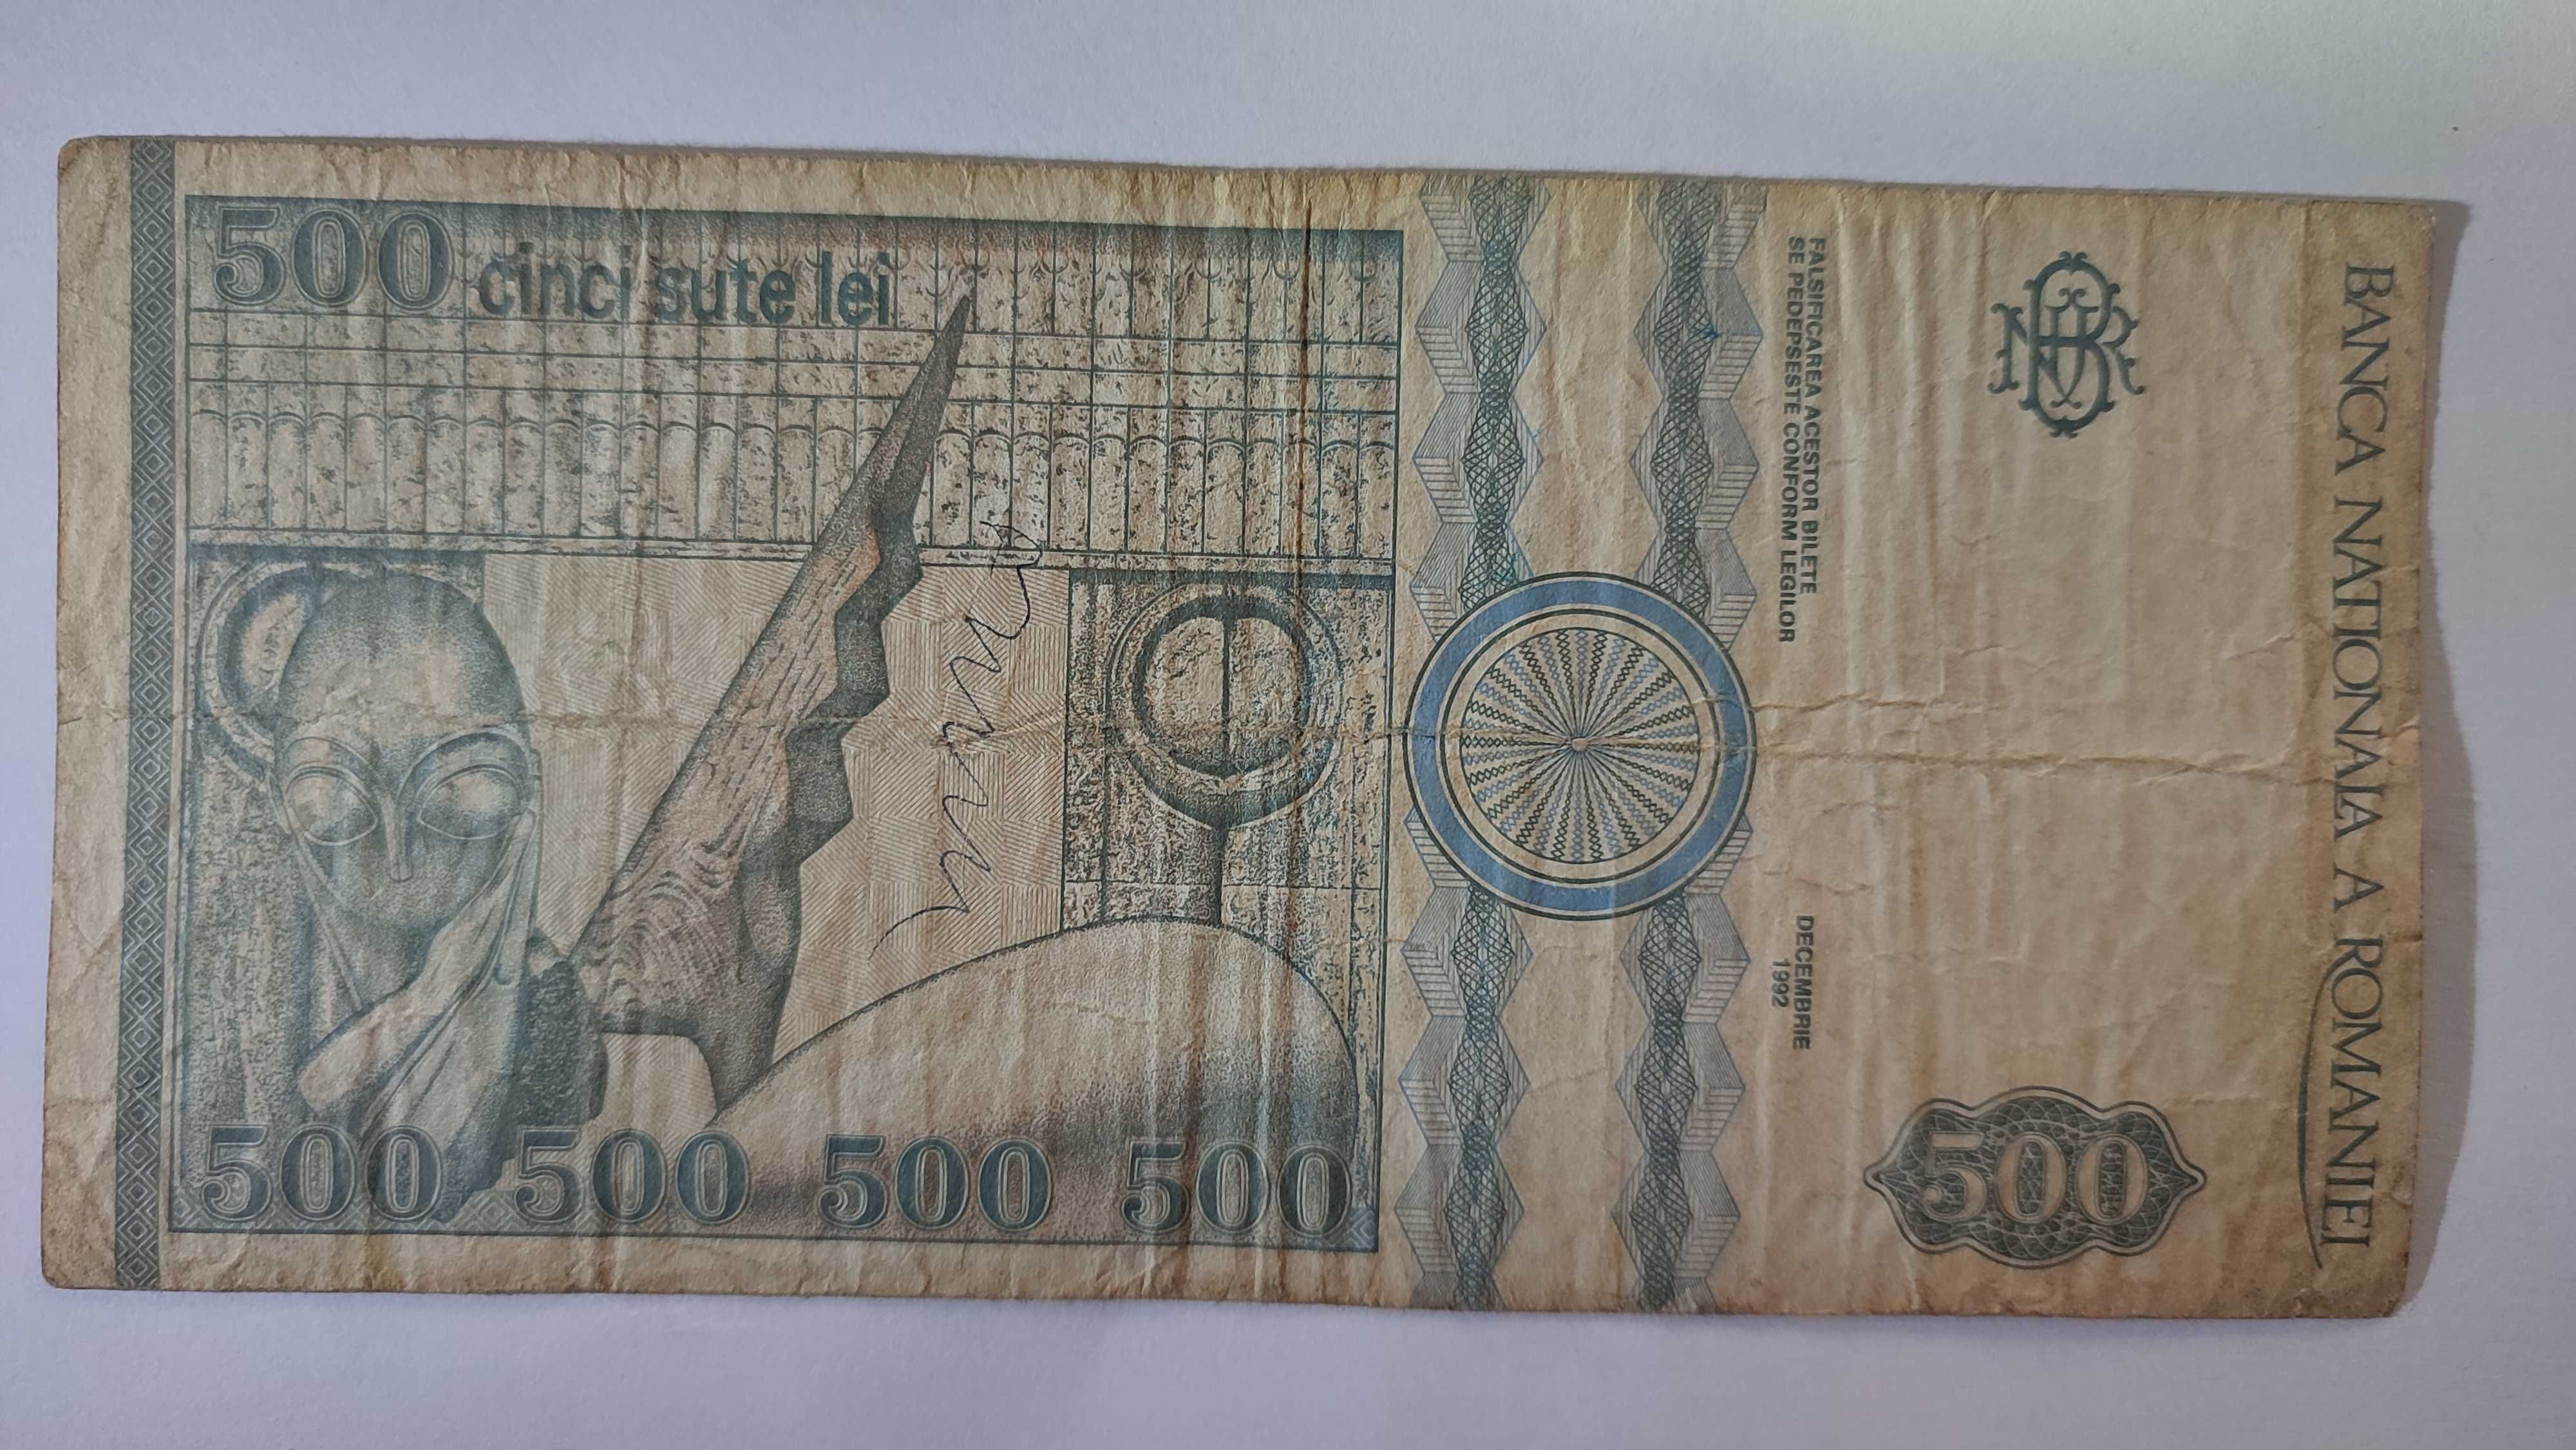 Bancnota de 500 lei, decembrie 1992 Seria H.